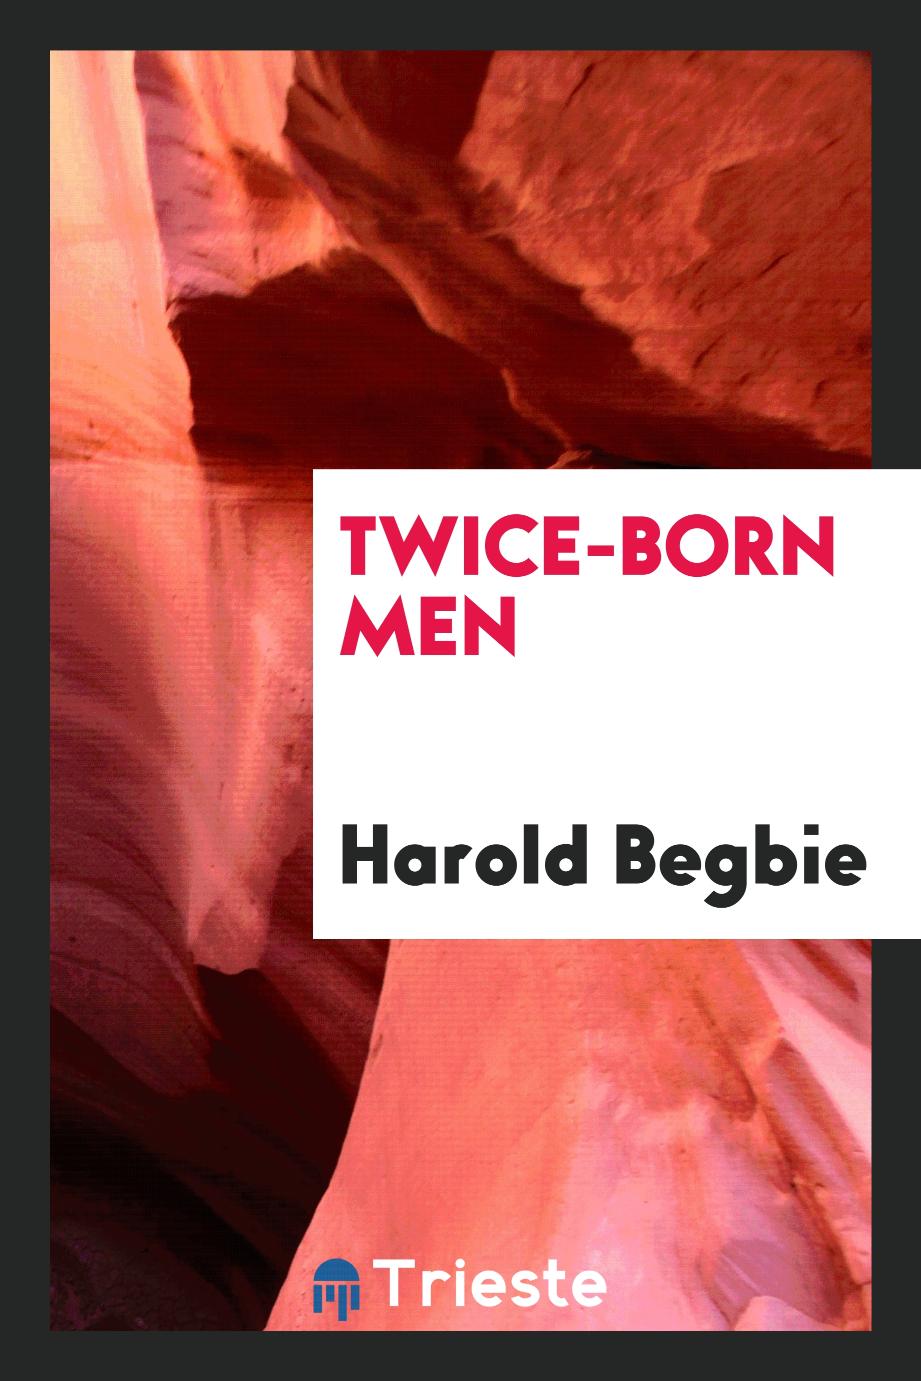 Twice-born men